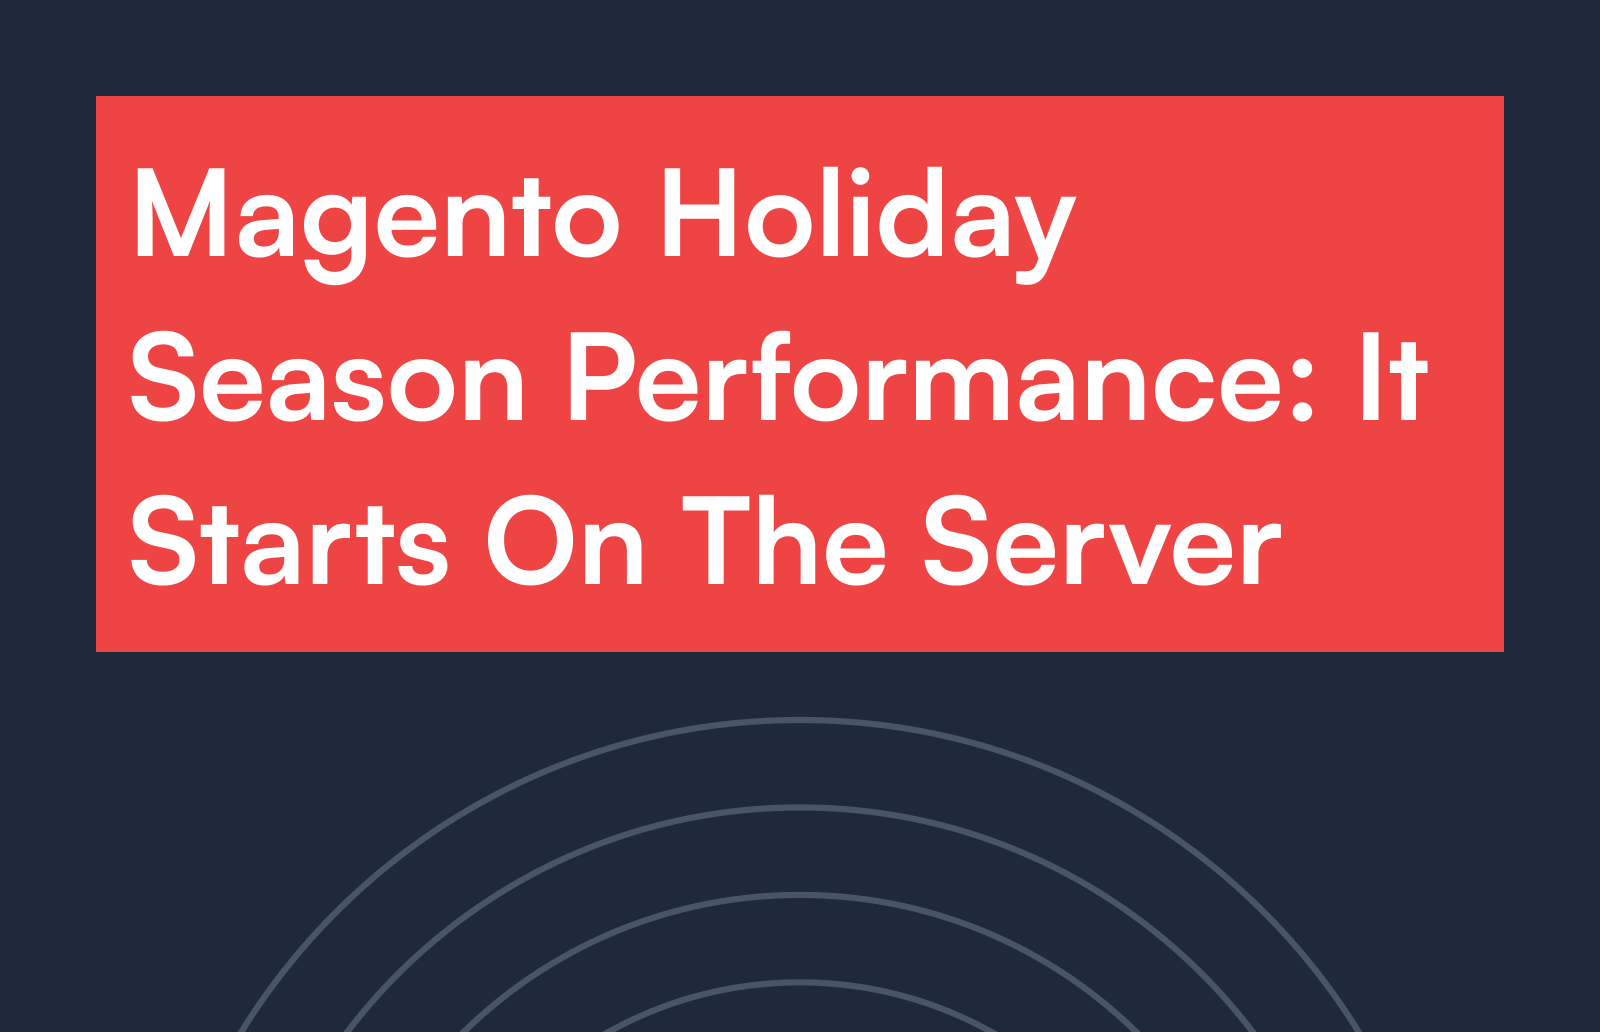 Magento Holiday Season Performance: It Starts On The Server